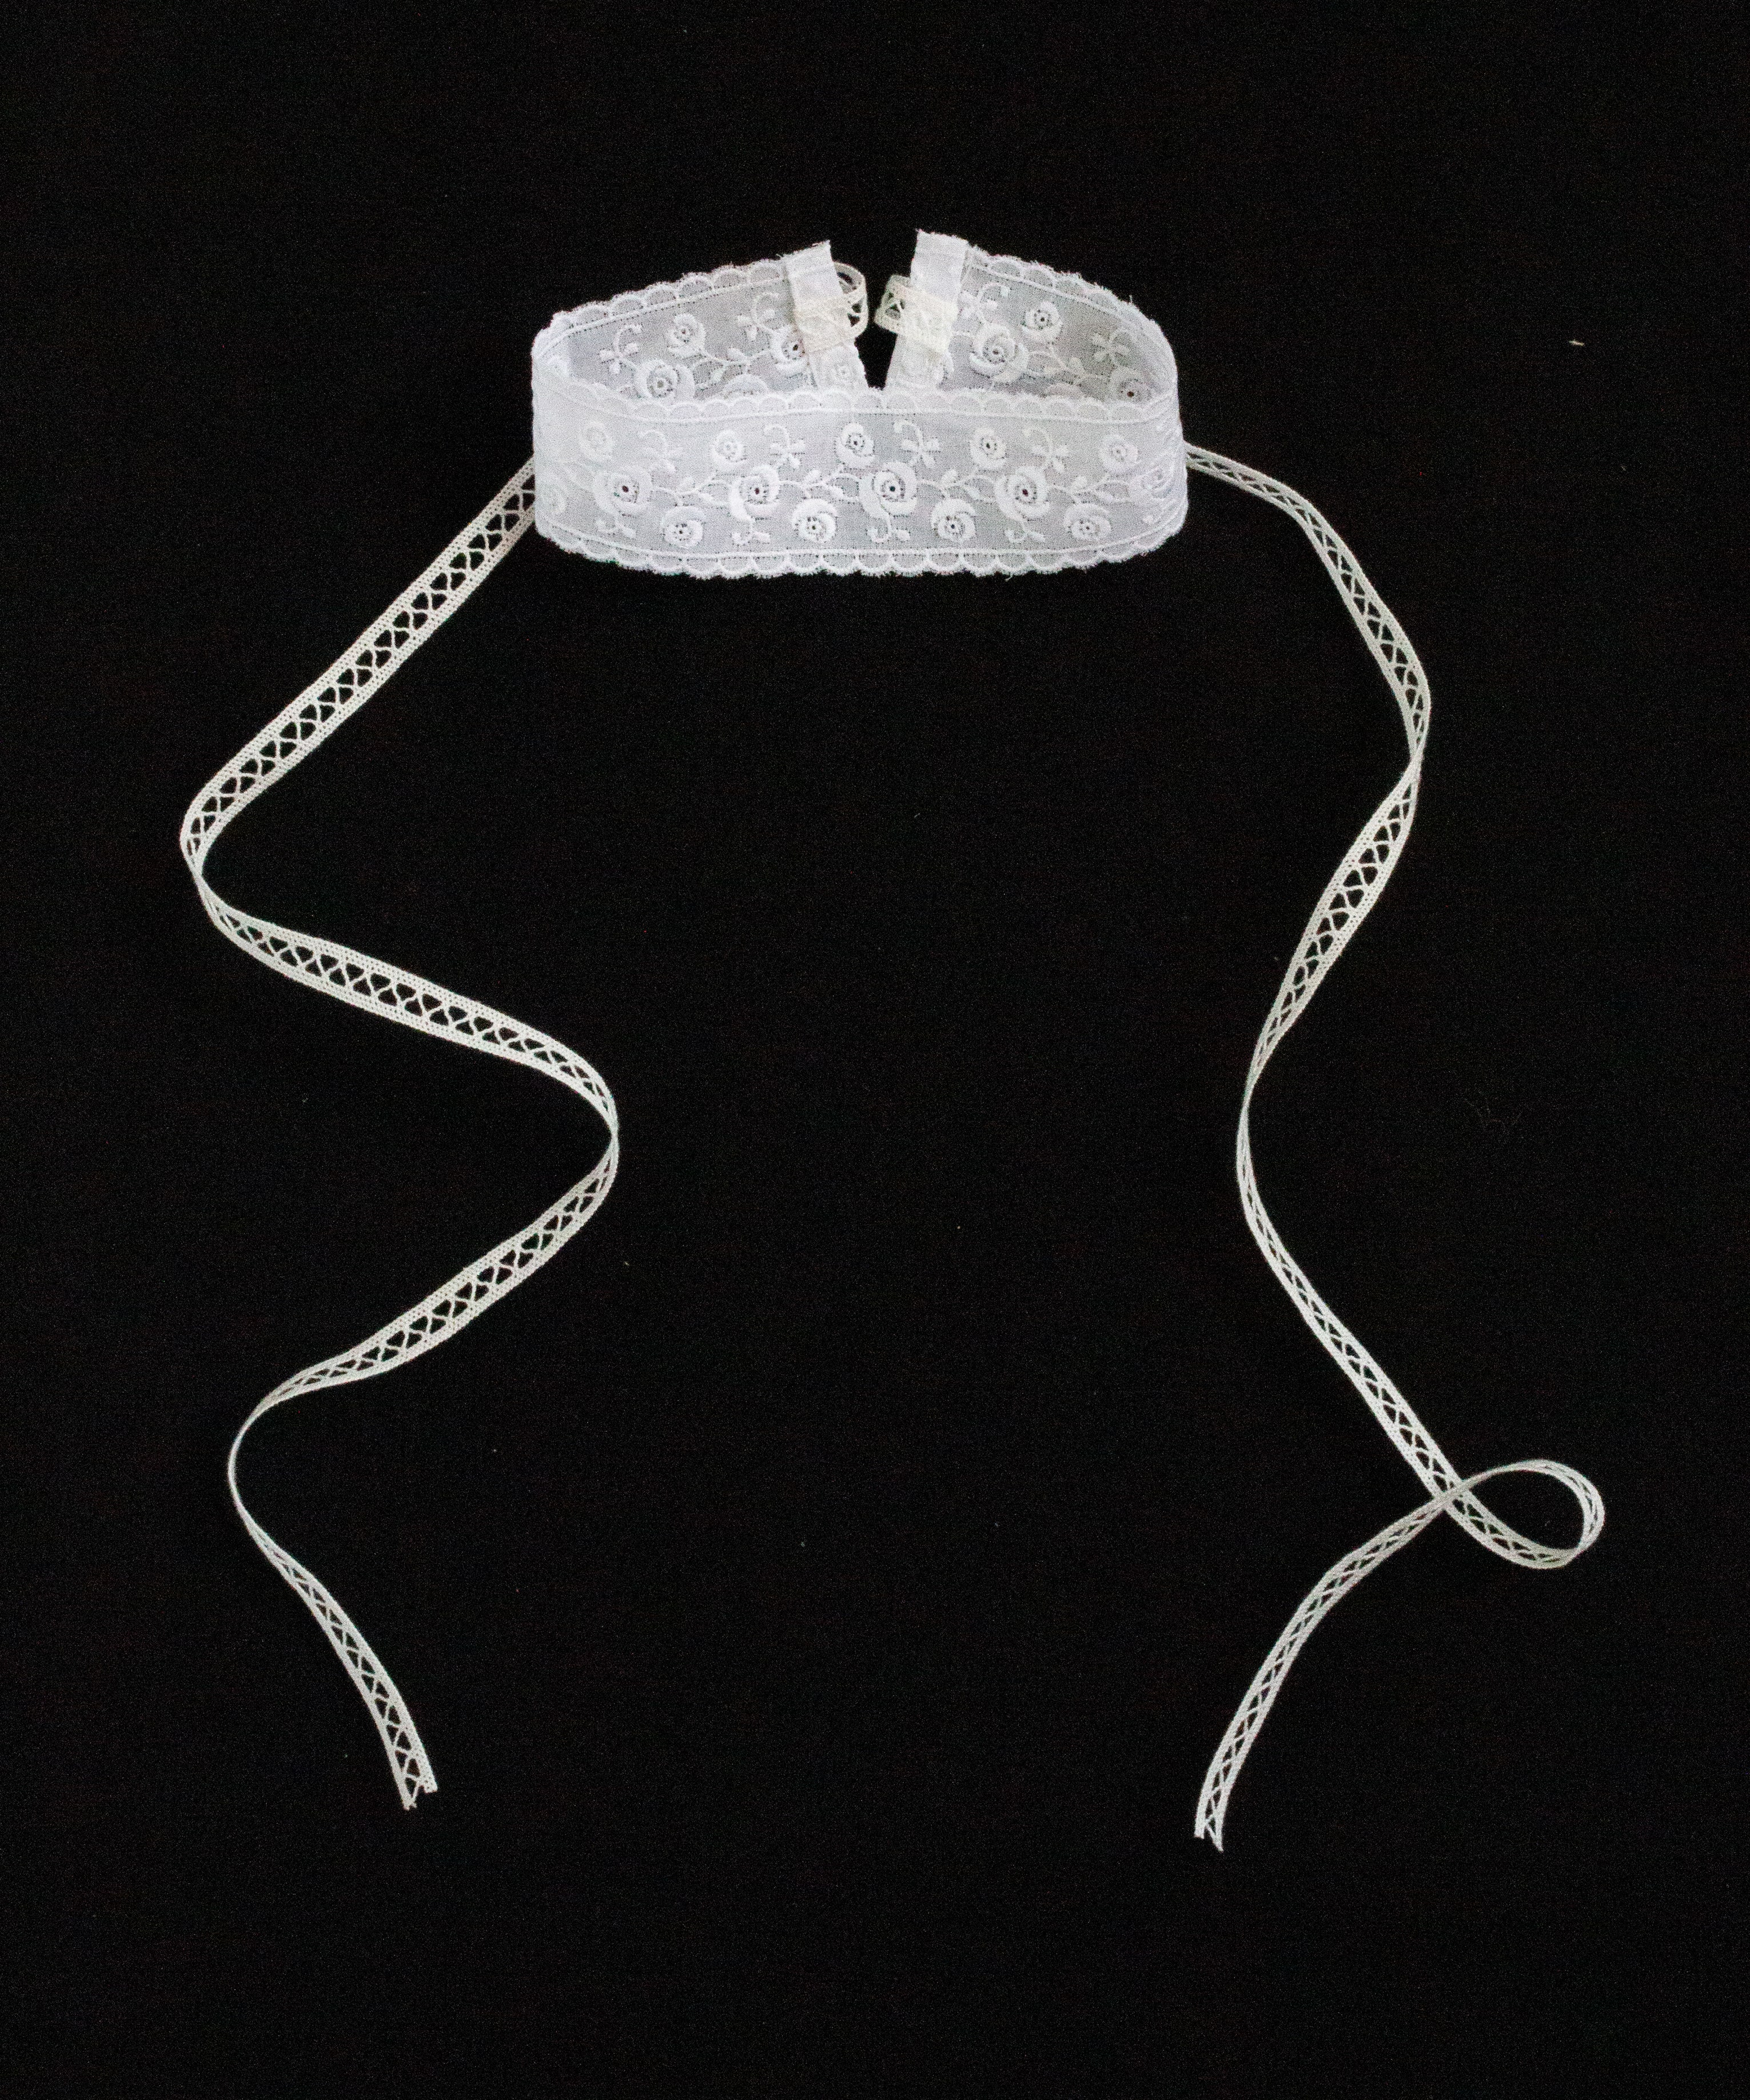 Floral Lace Choker Necklace - White